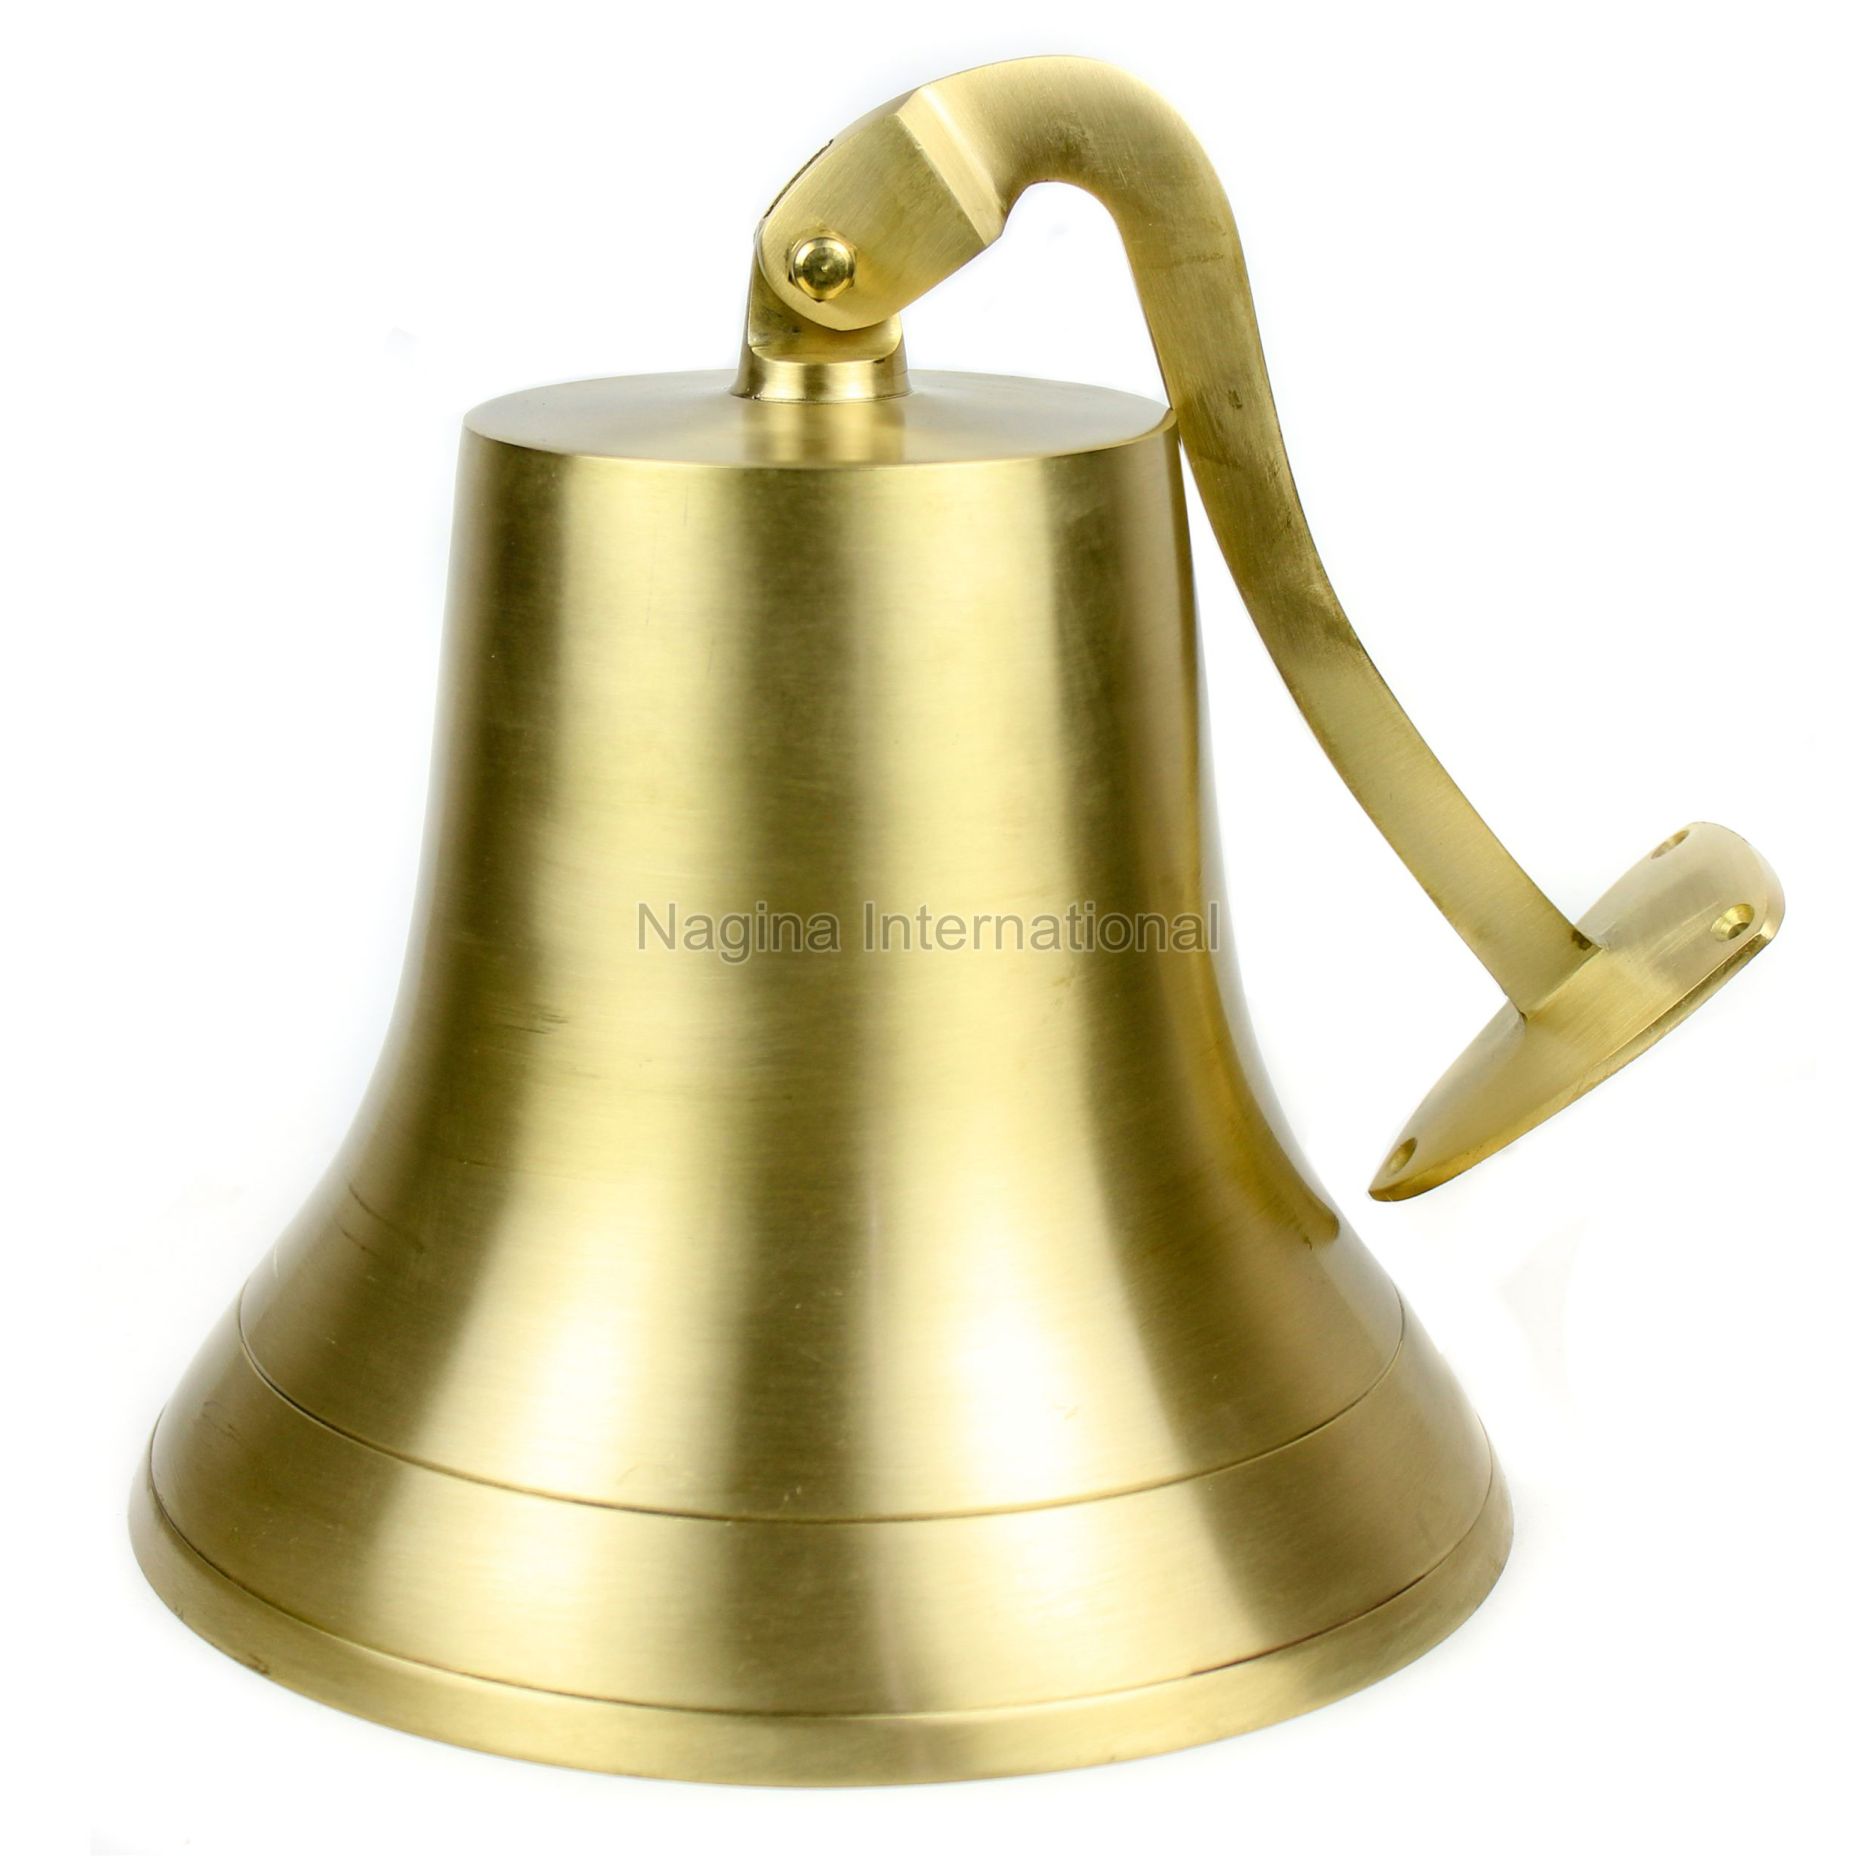 Bells – Nagina International